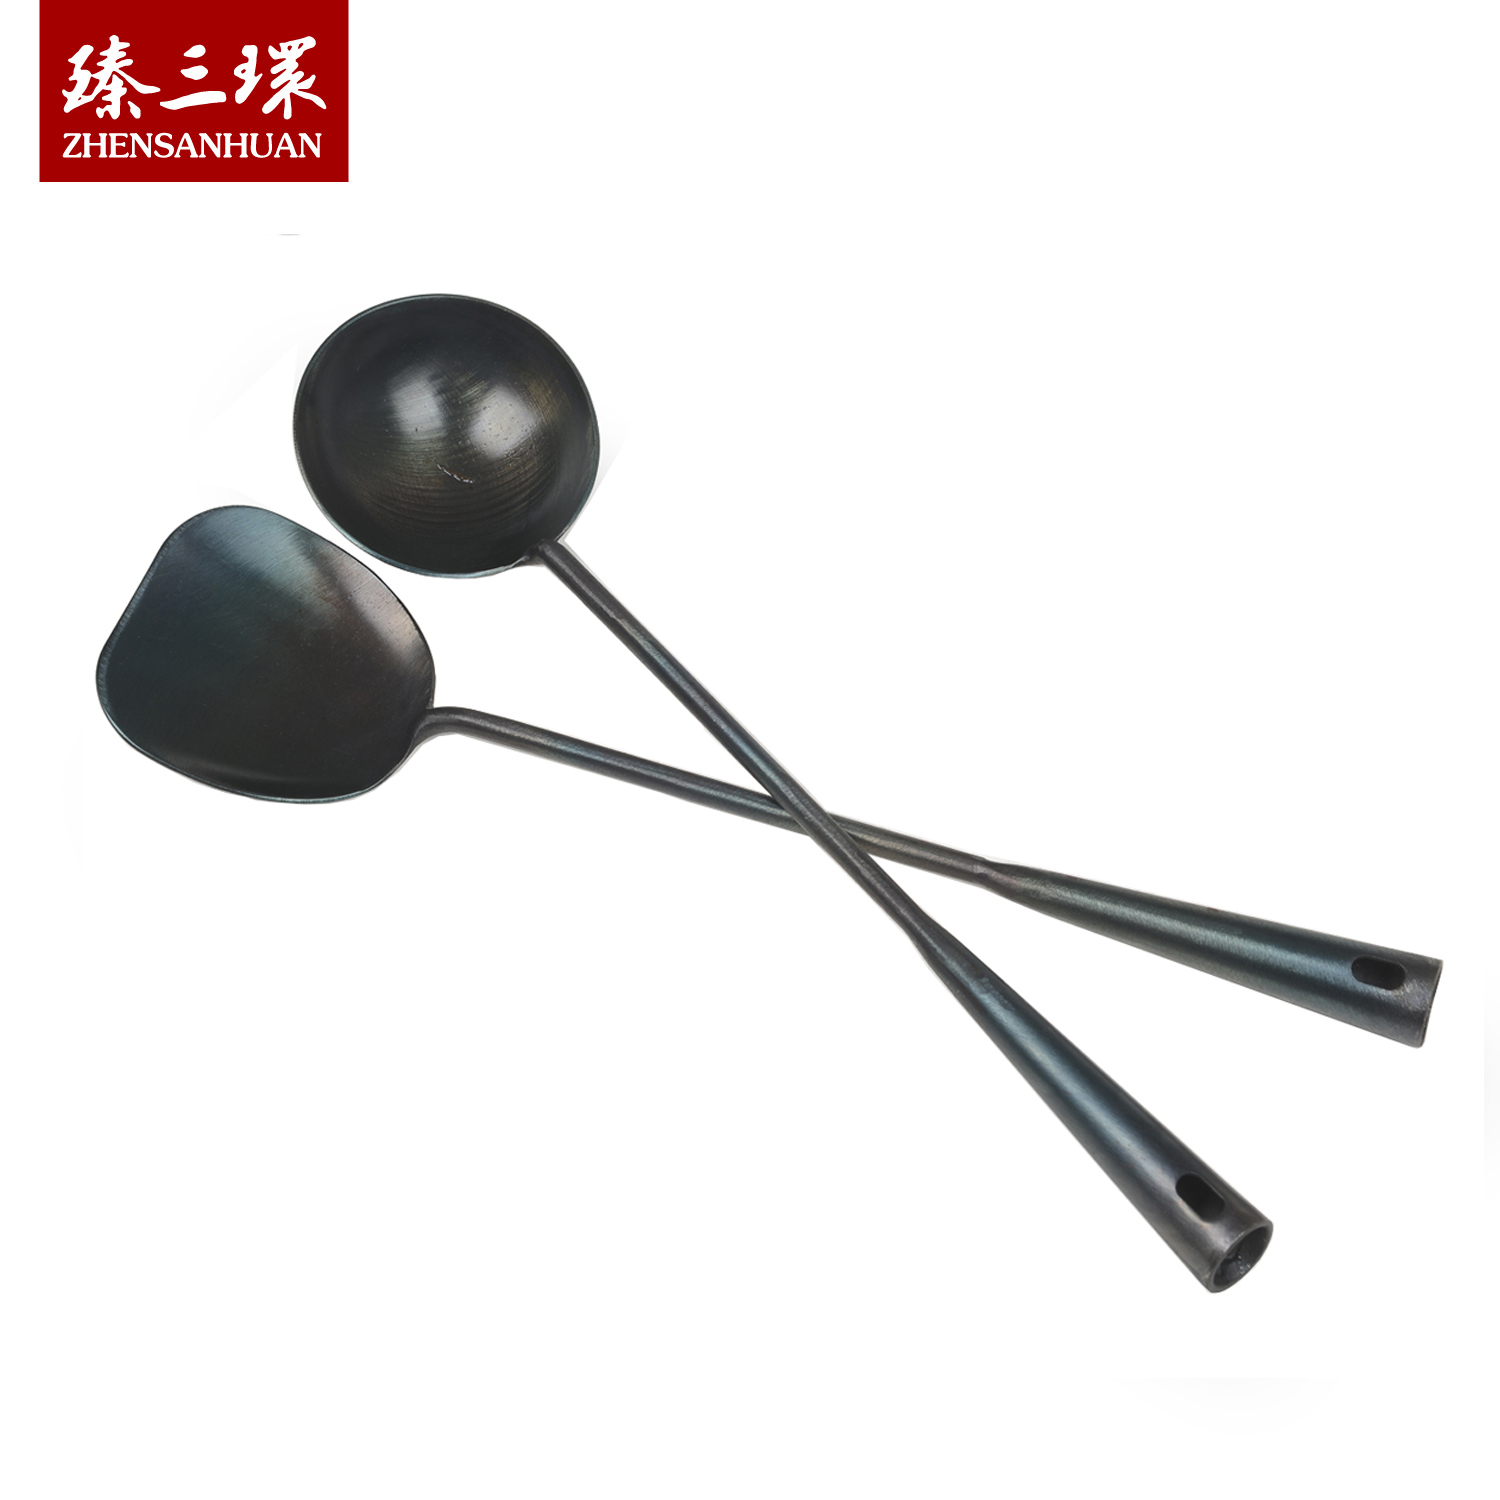 Zhensanhuan Silicone Handle Cover for Iron Handle Woks 